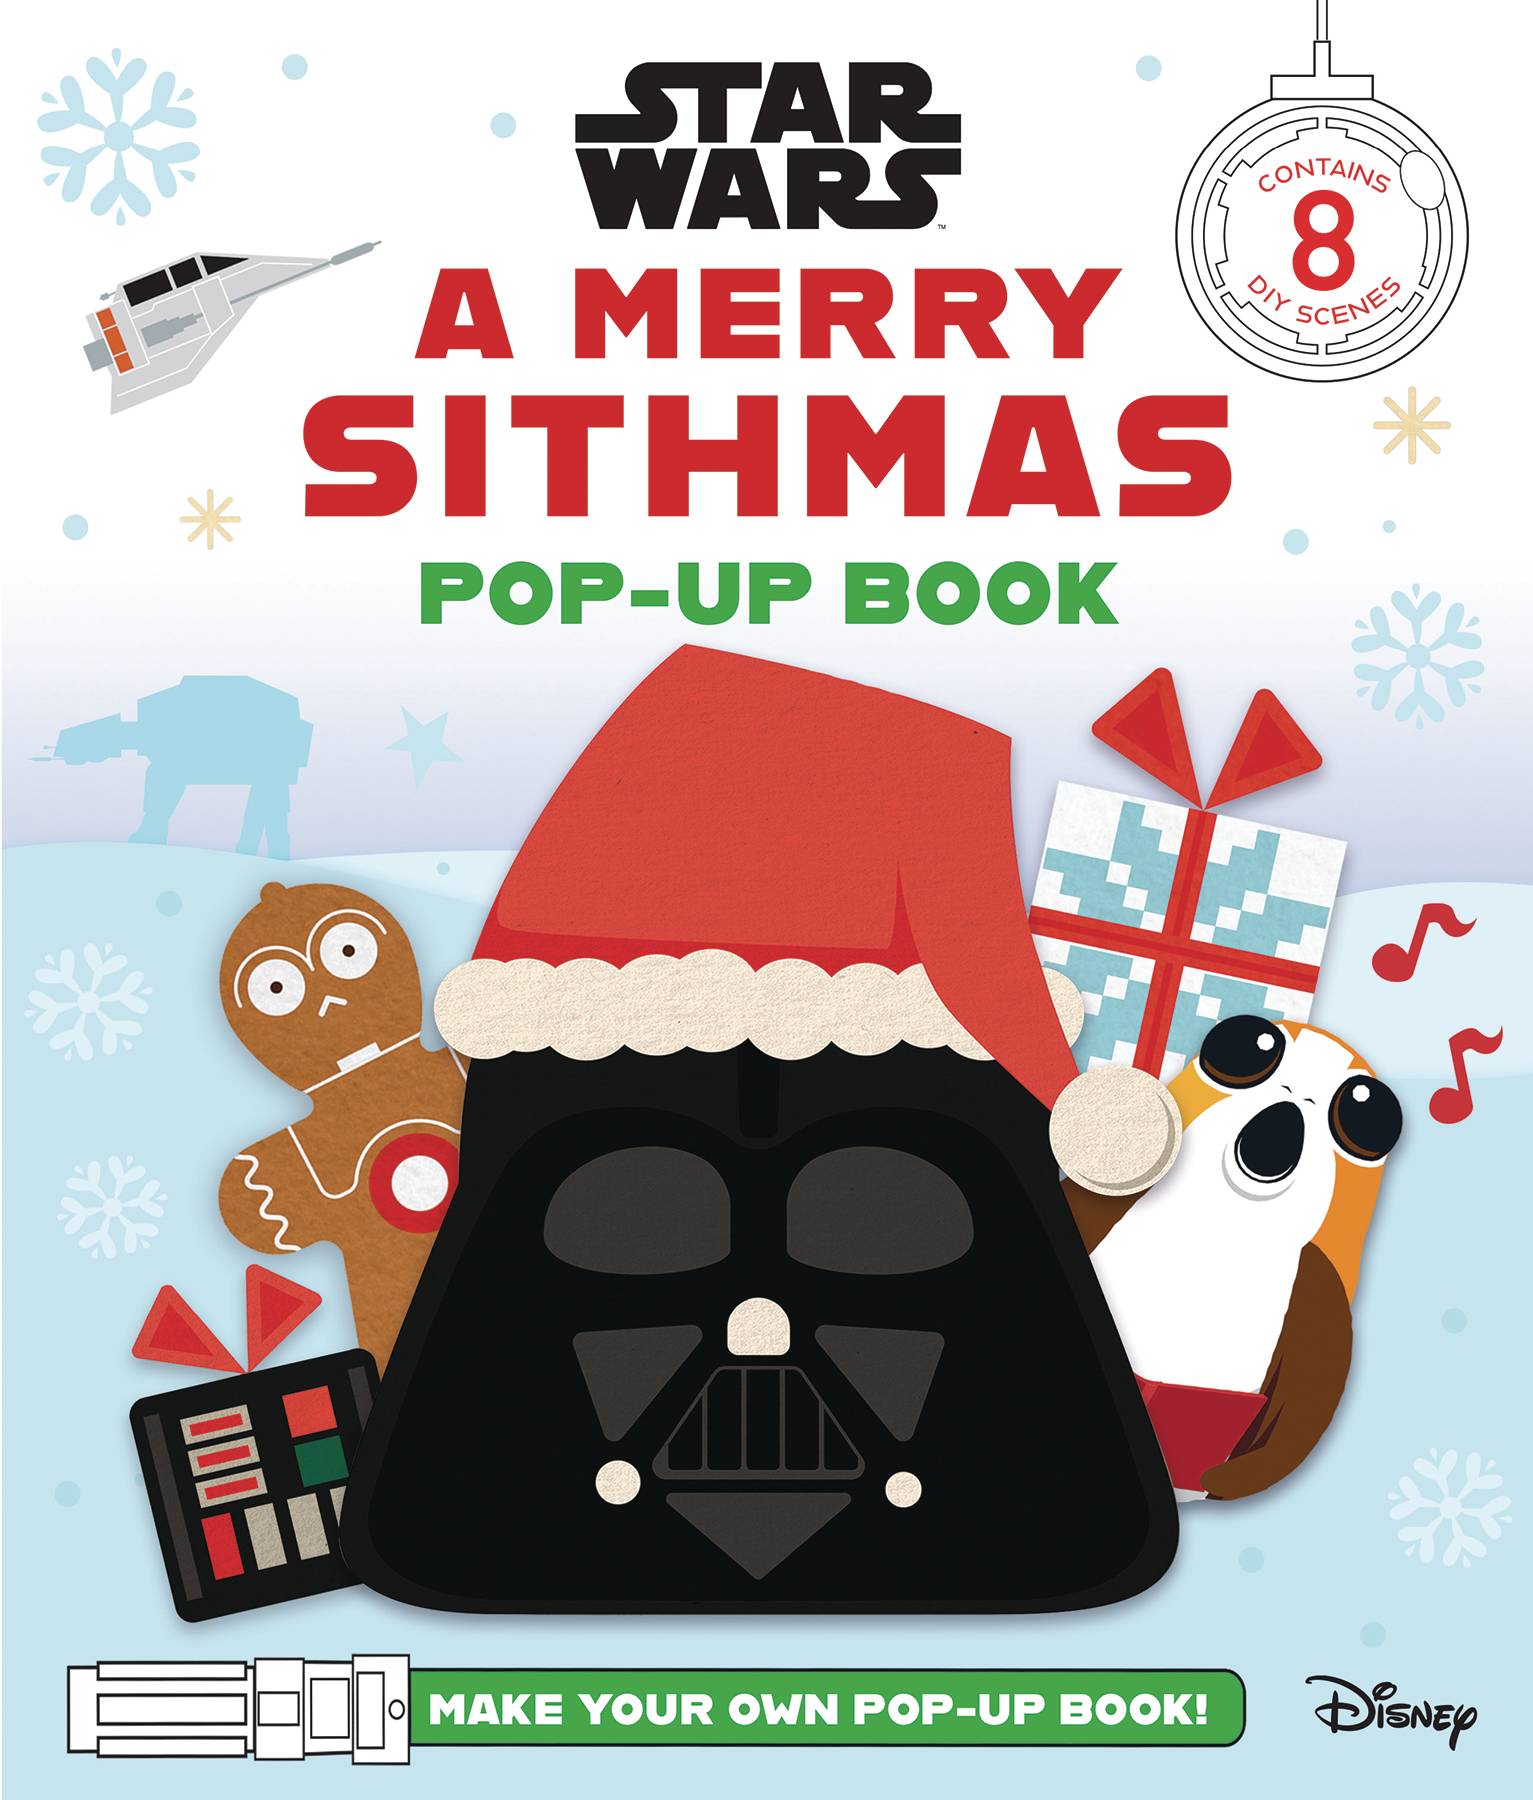 Star Wars Merry Sithmas Pop Up Book